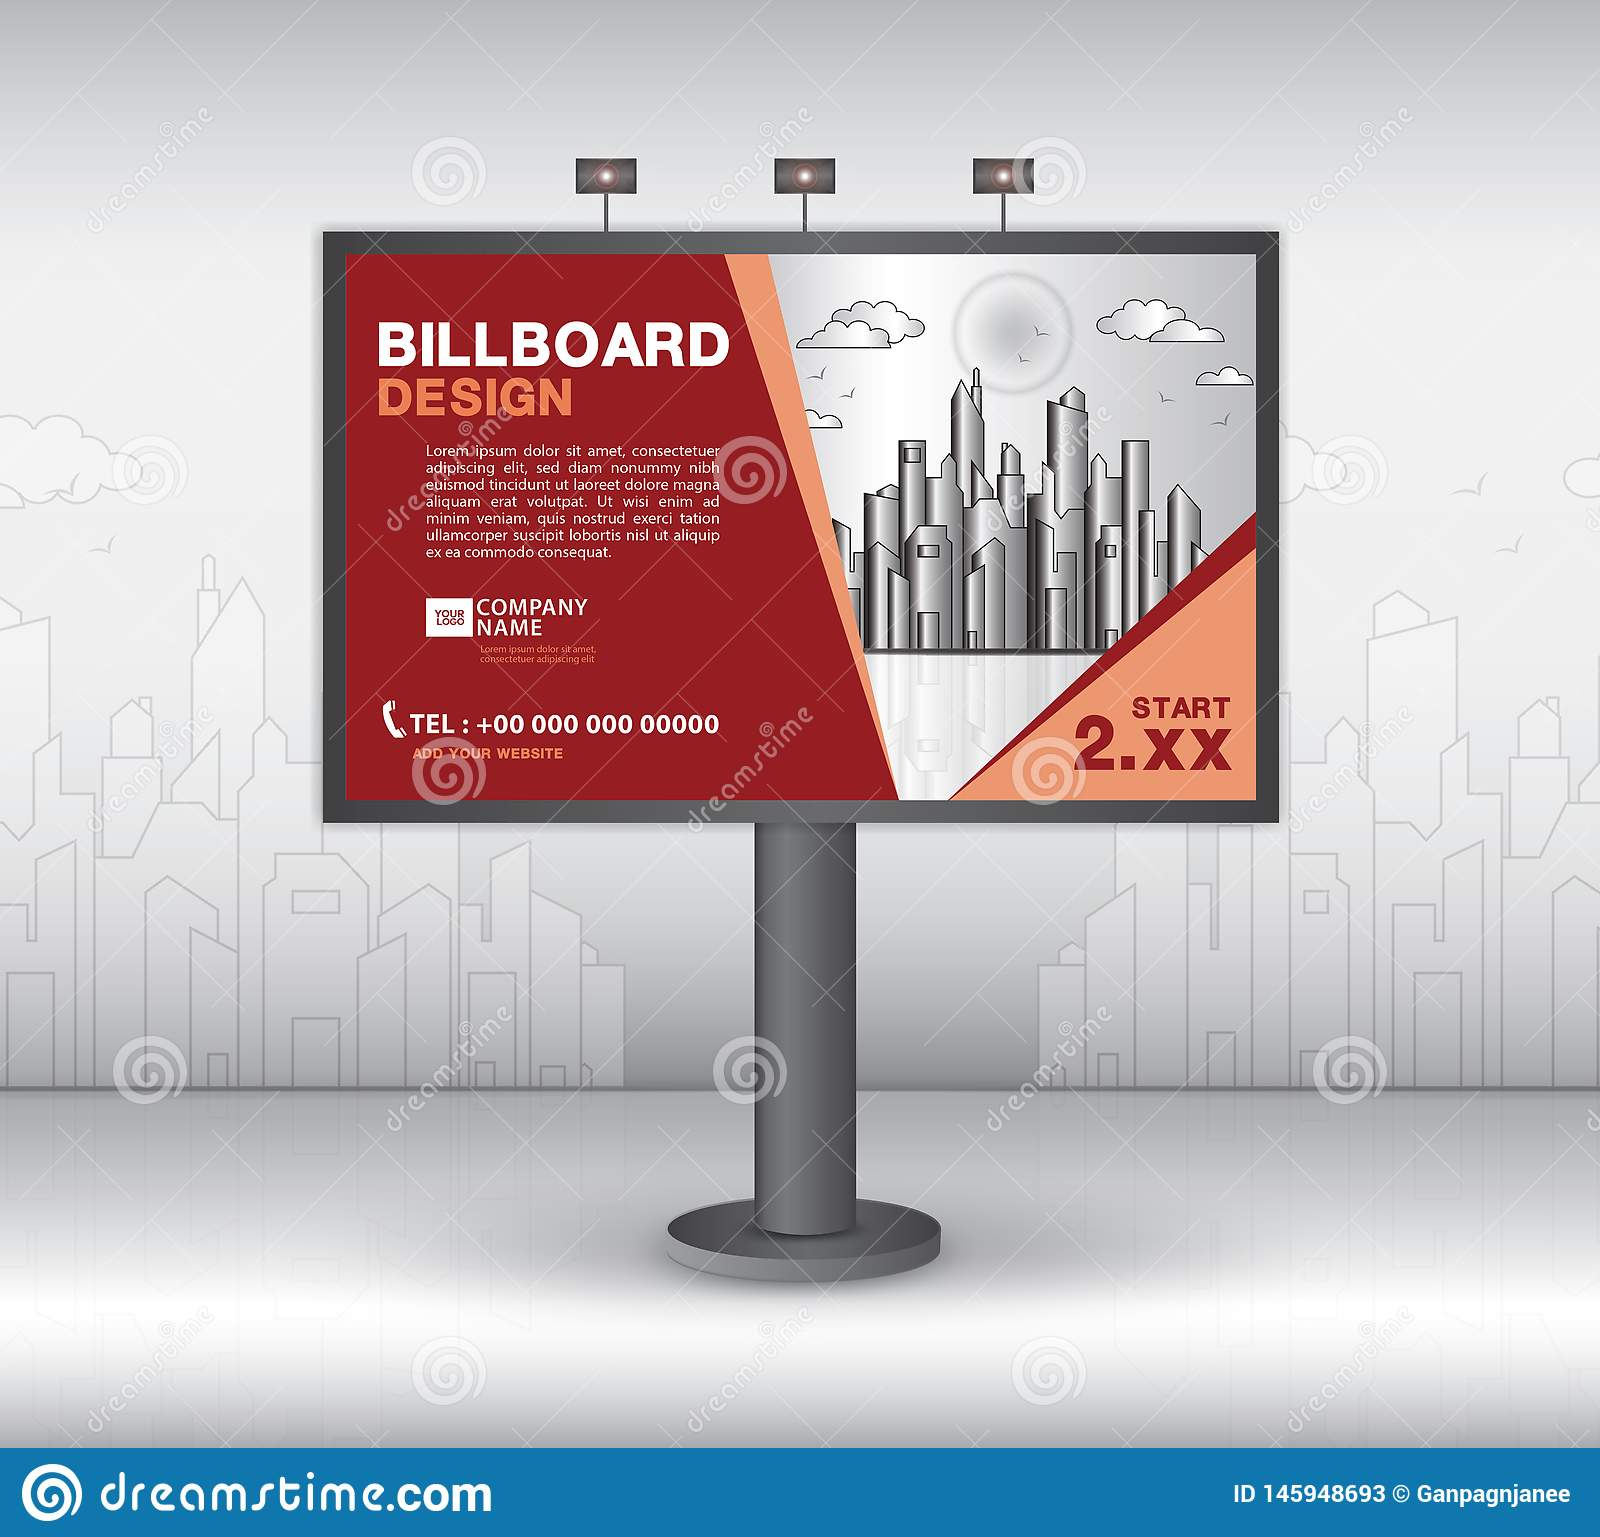 Billboard Banner Template Vector Design, Advertisement With Outdoor Banner Template